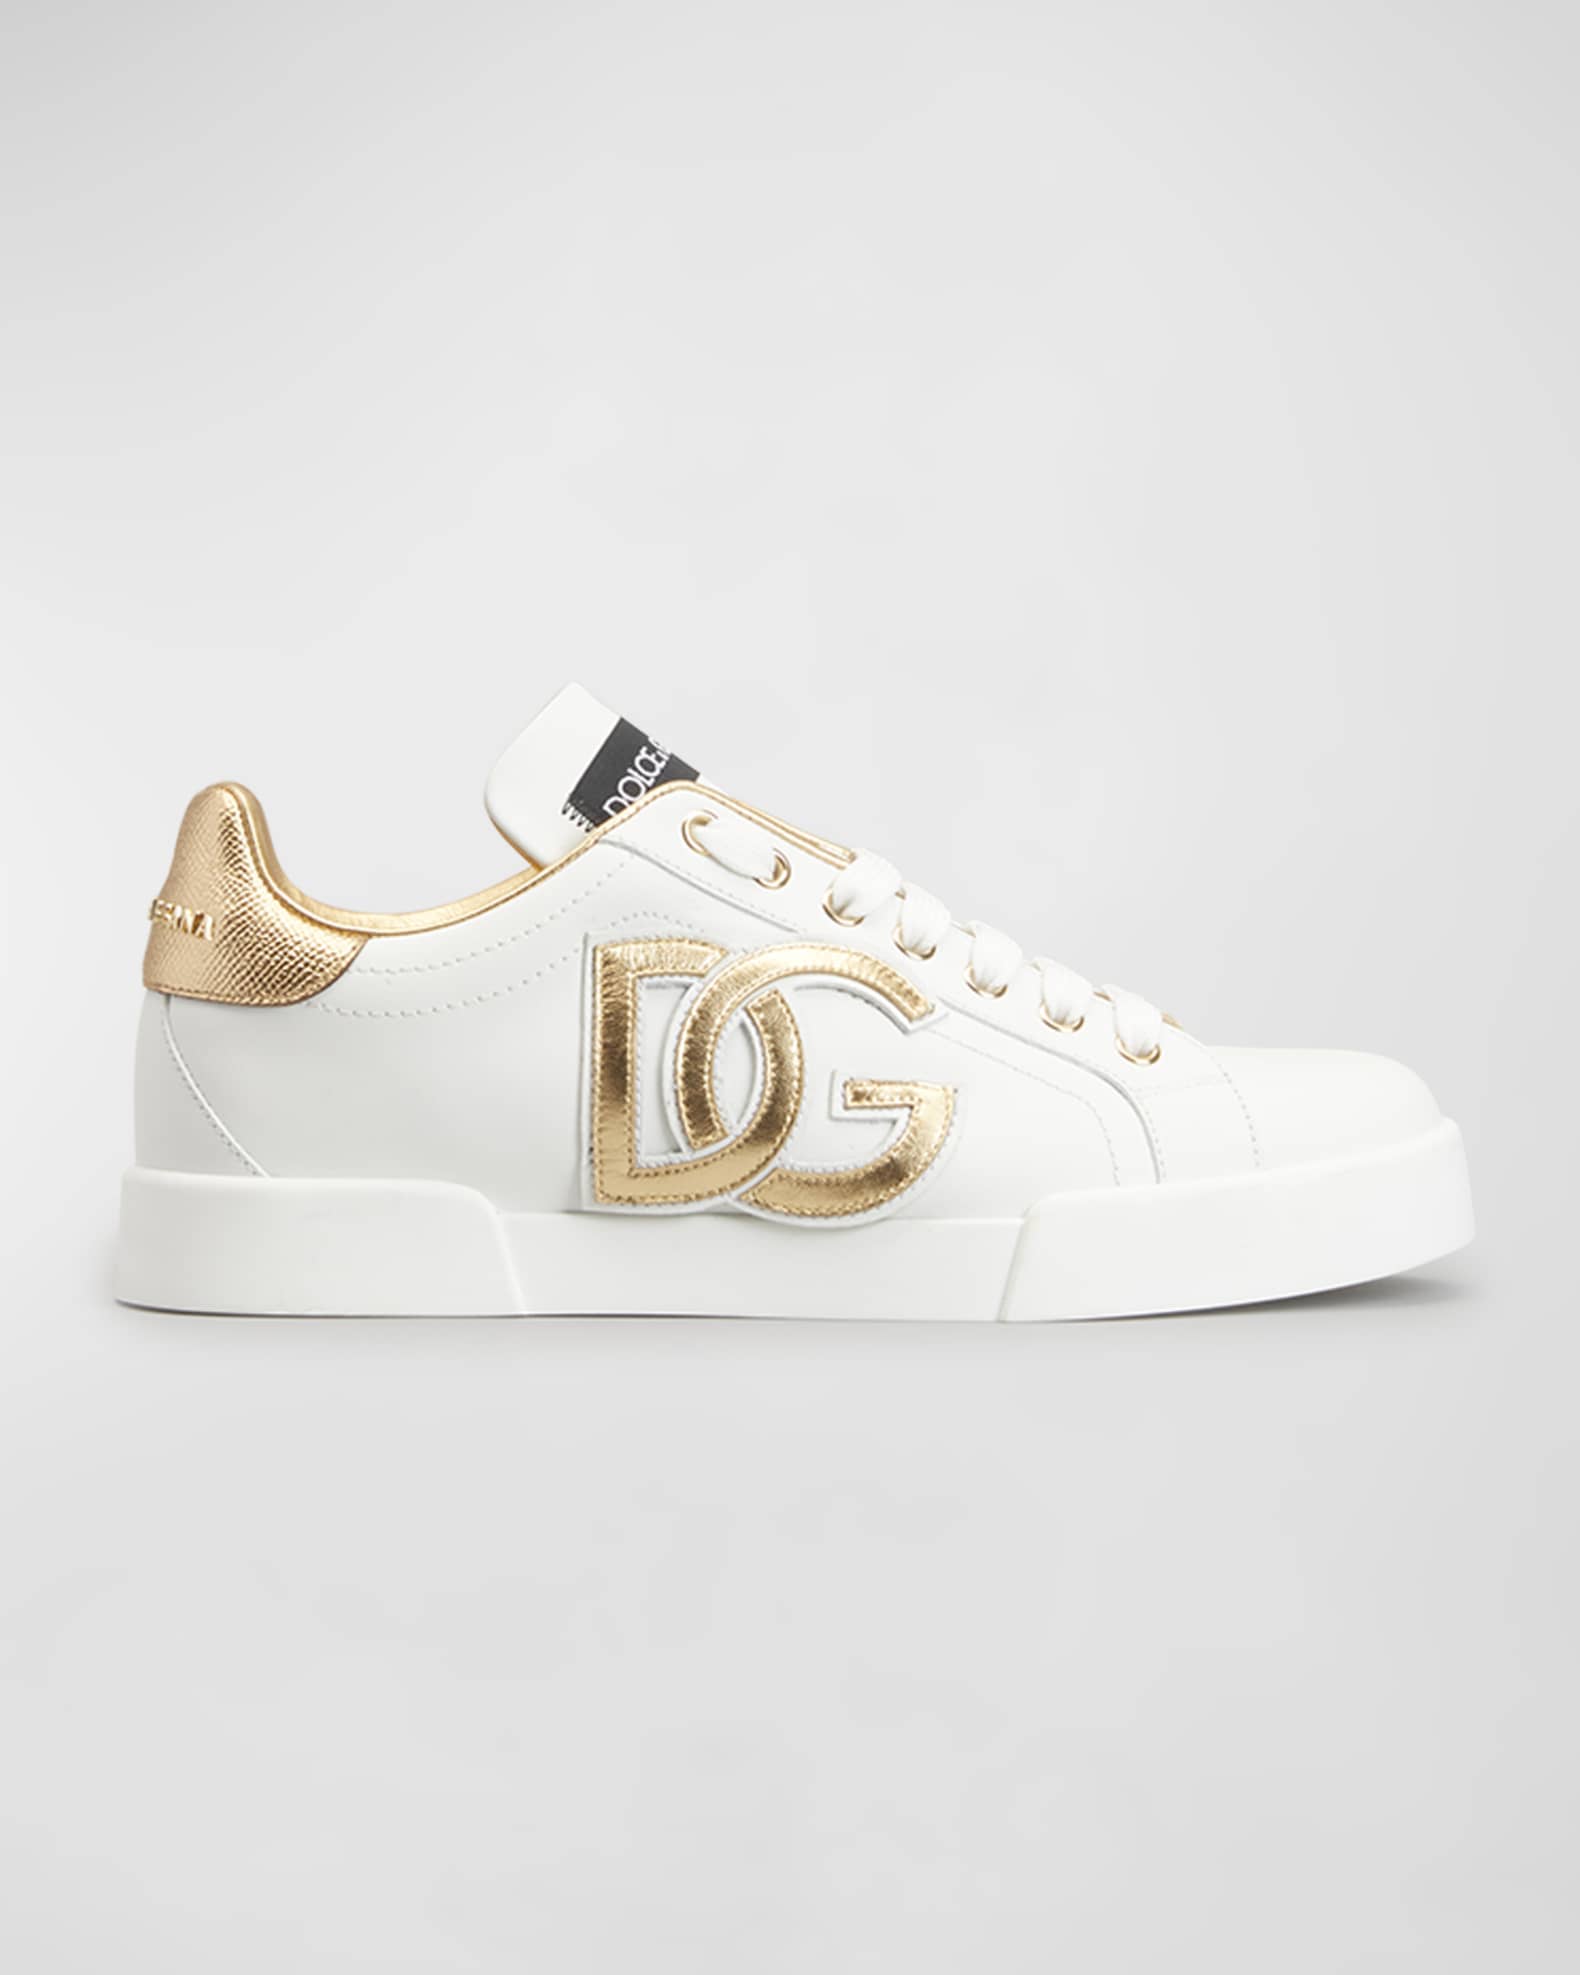 Dolce&Gabbana Bicolor Low-Top Leather Sneakers | Neiman Marcus